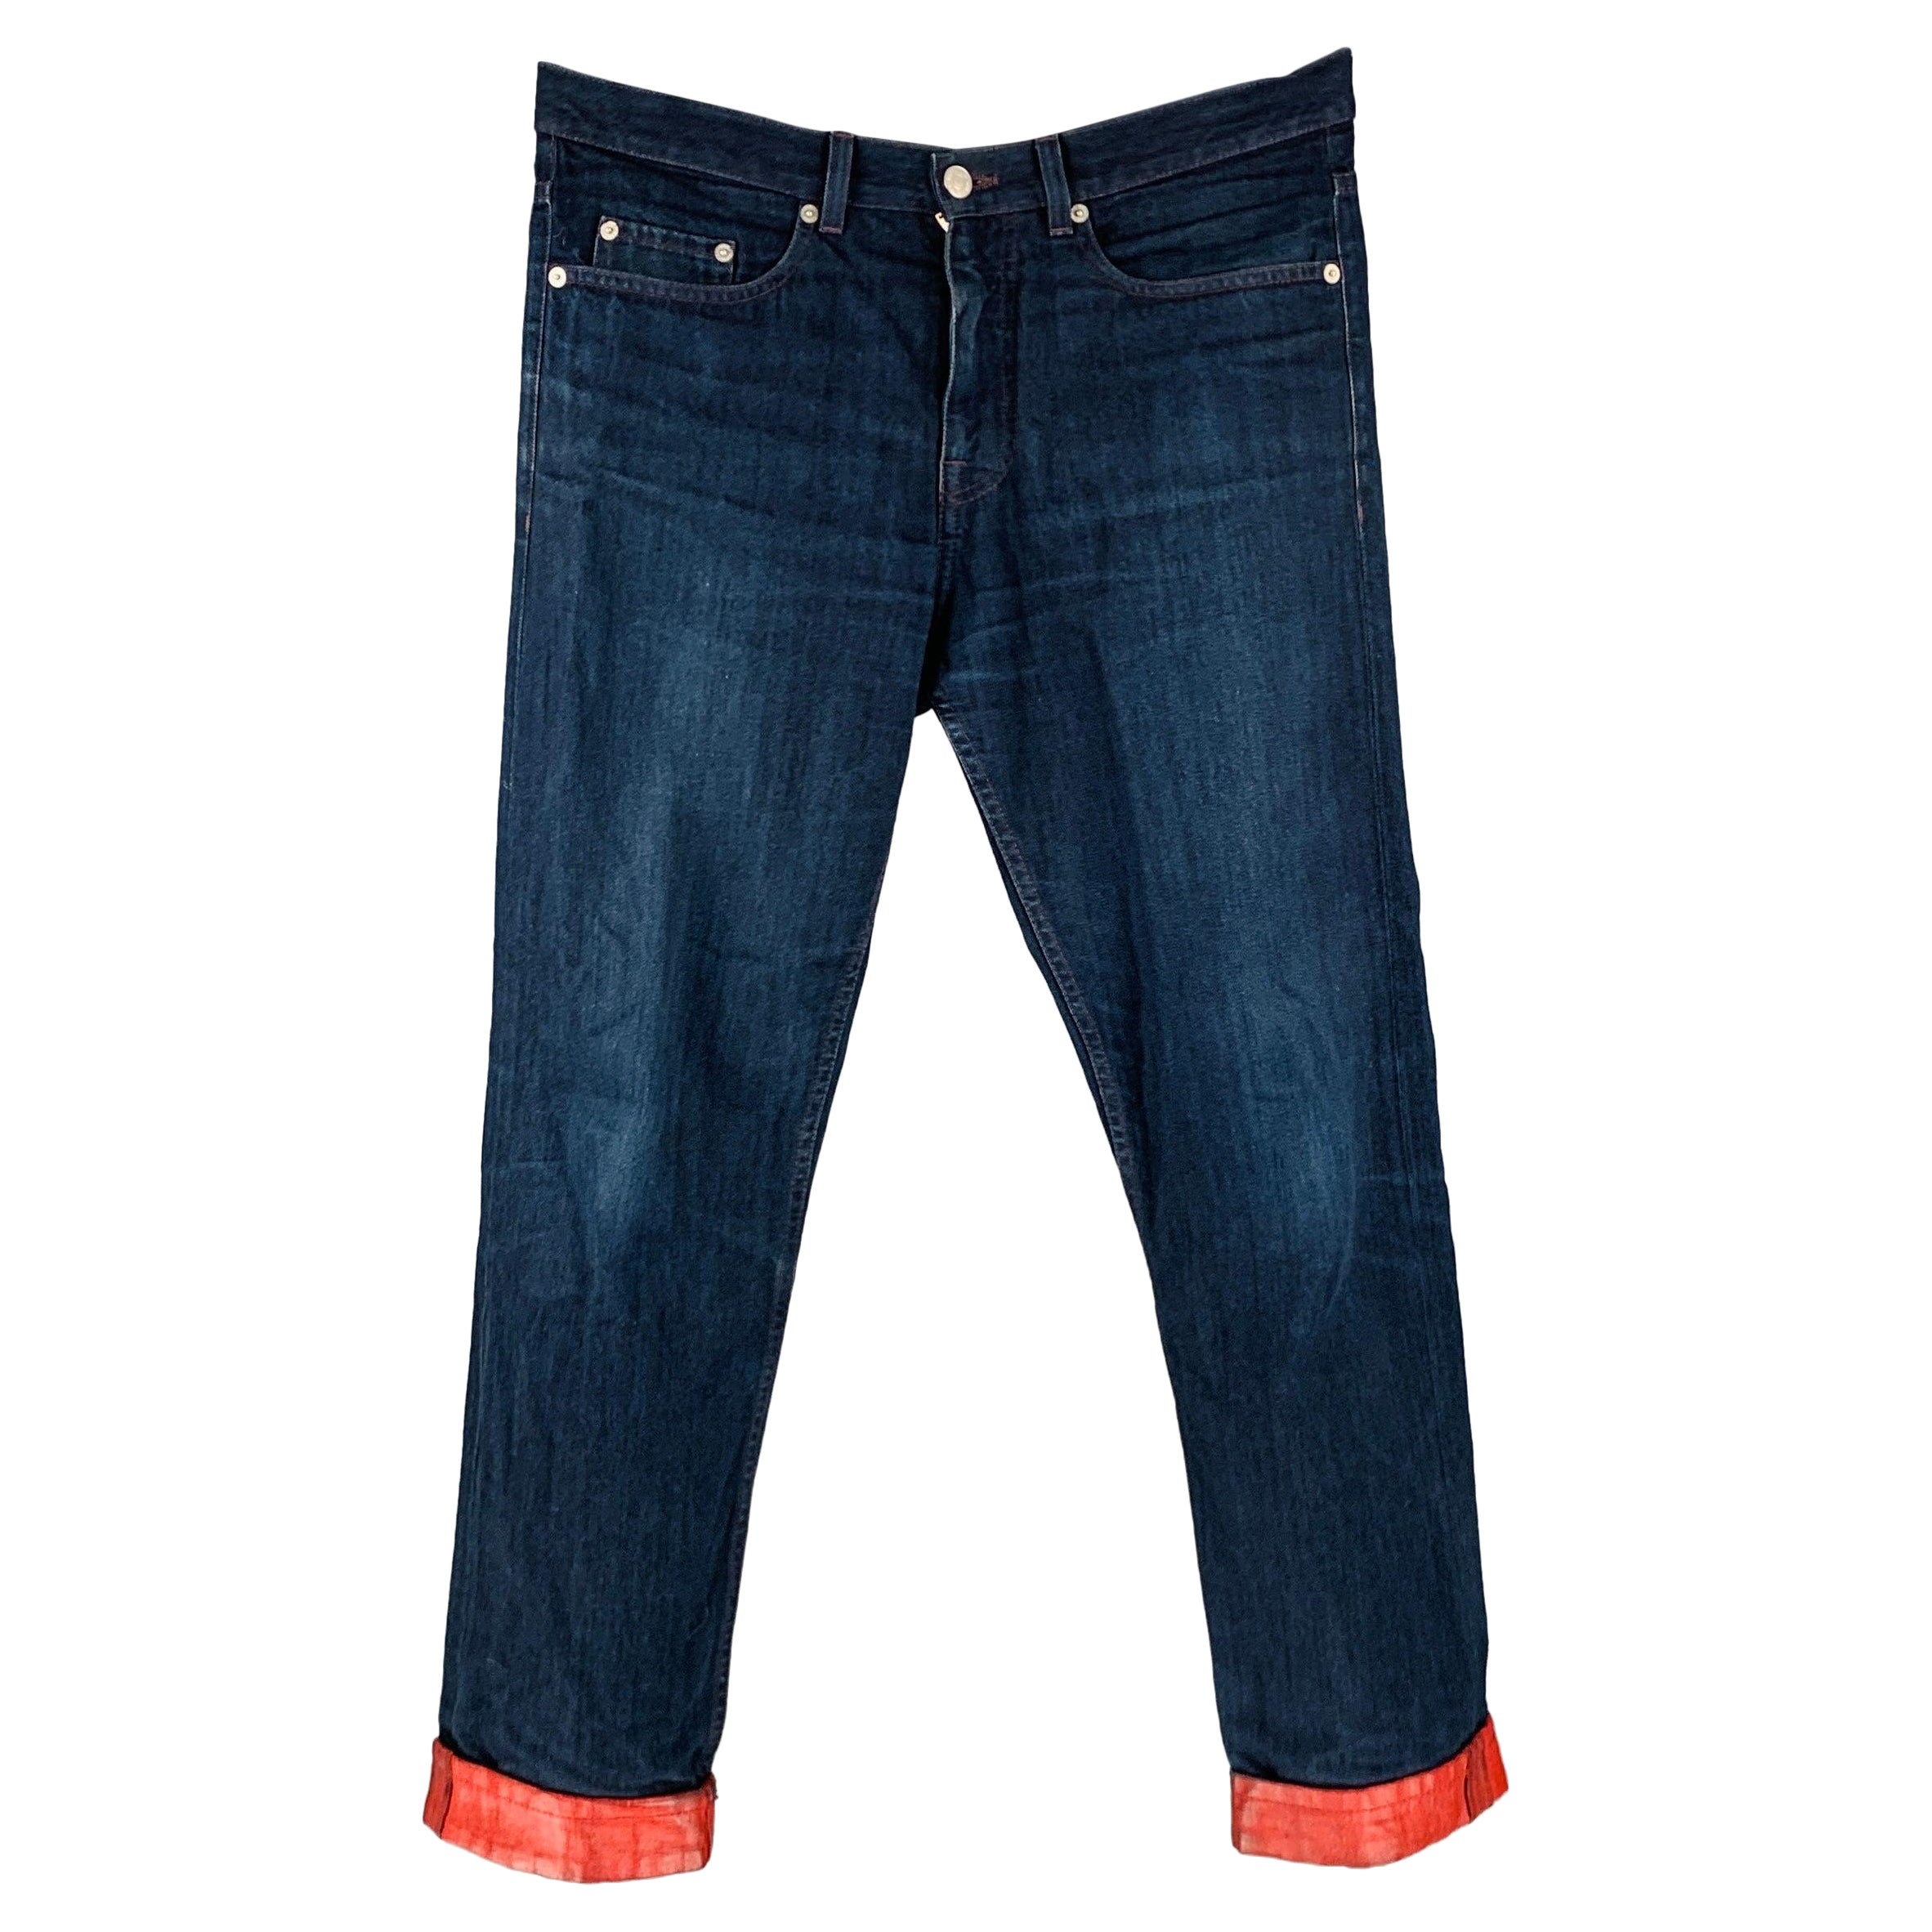 DRIES VAN NOTEN Size 30 Navy Cotton 5 Pocket Jeans For Sale